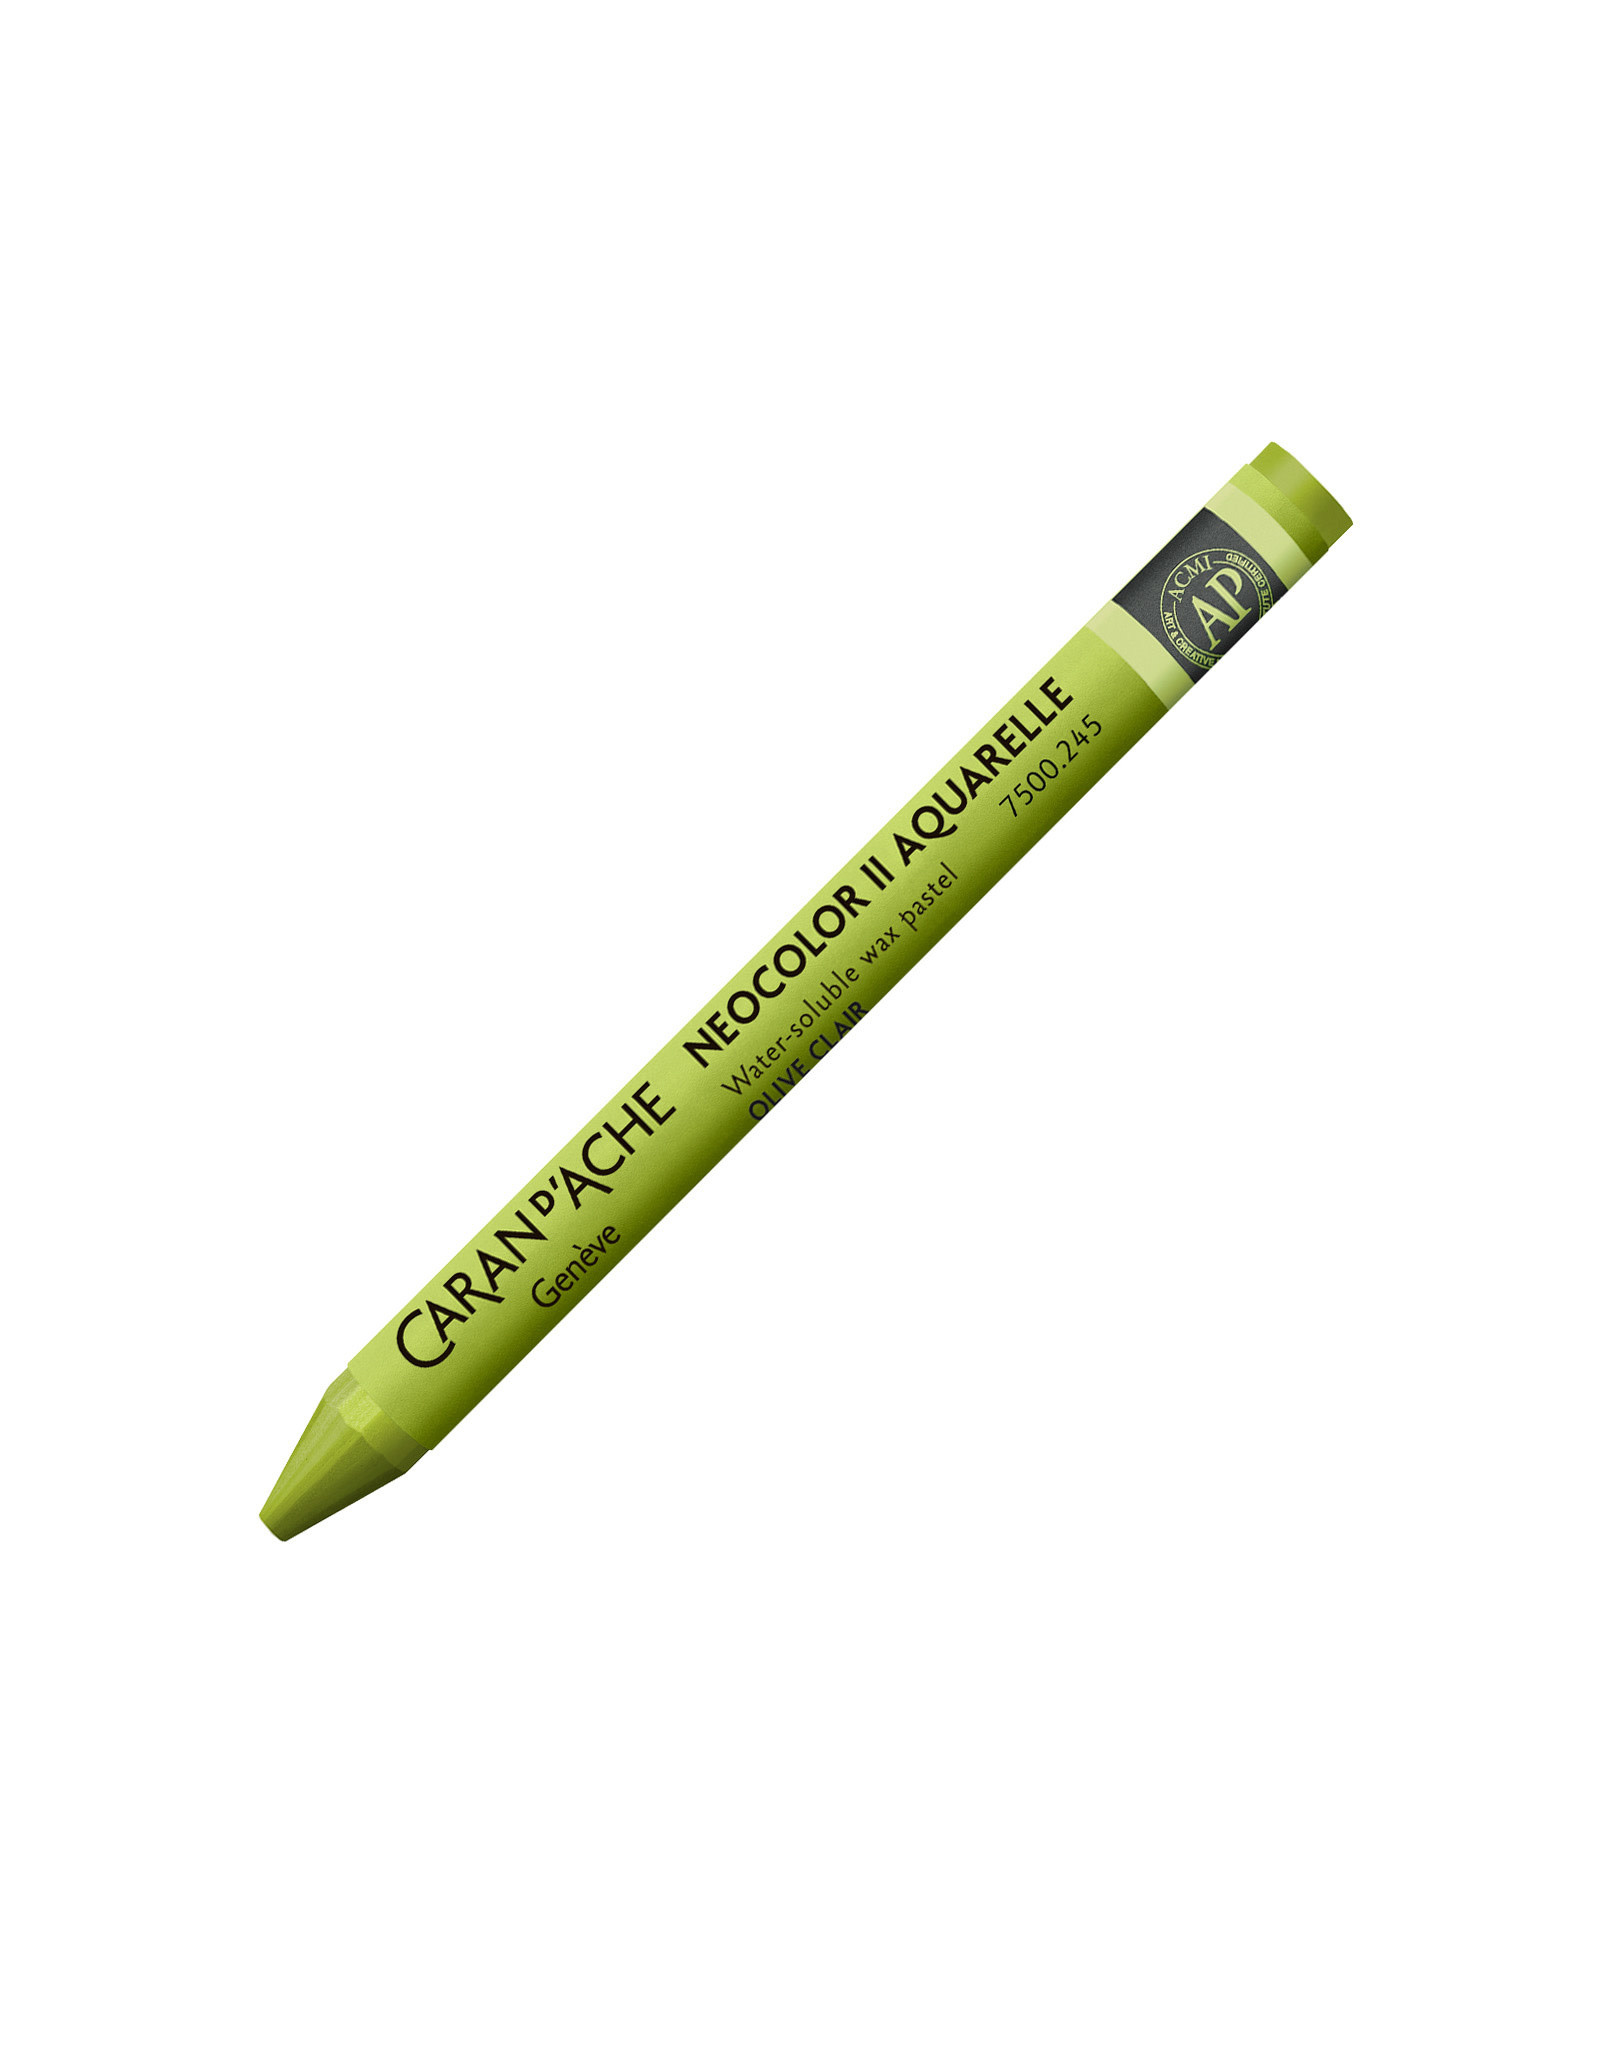 Caran d'Ache Neocolor II Crayons Light Olive